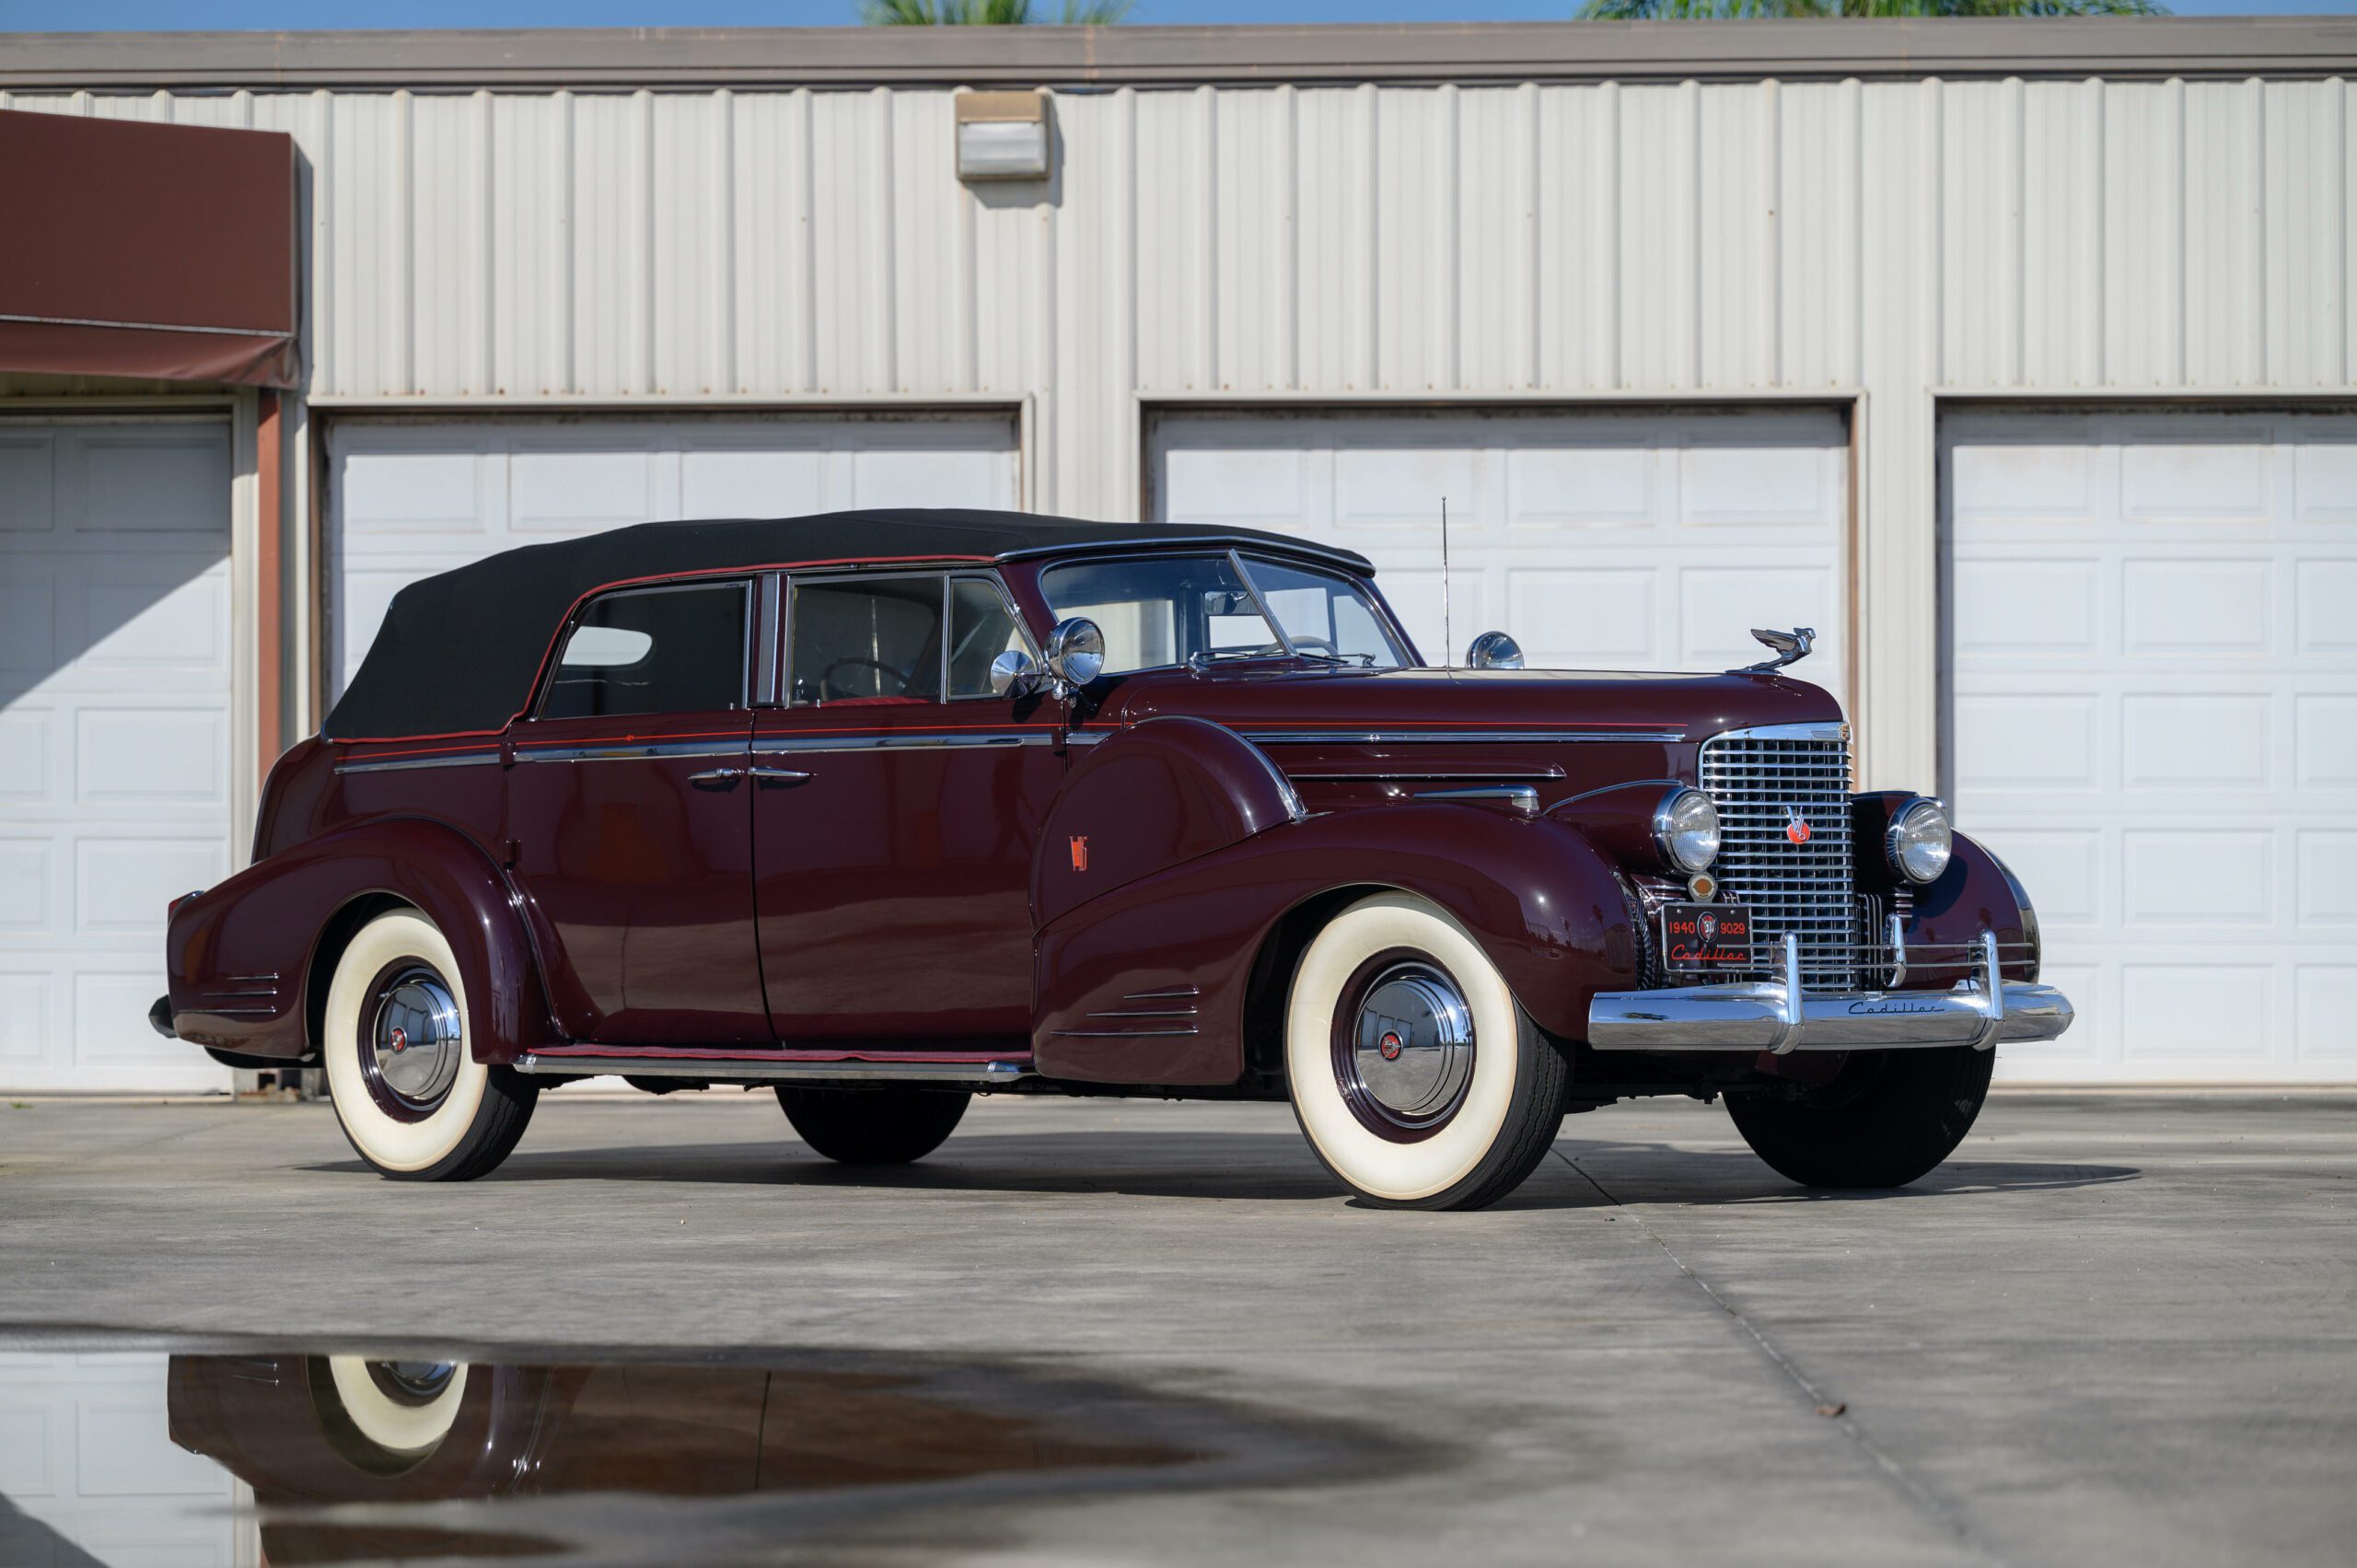 1940 Cadillac Series 40-90 Model 9029 Five-Passenger Convertible Sedan, cadillac, Cadillac Series 90